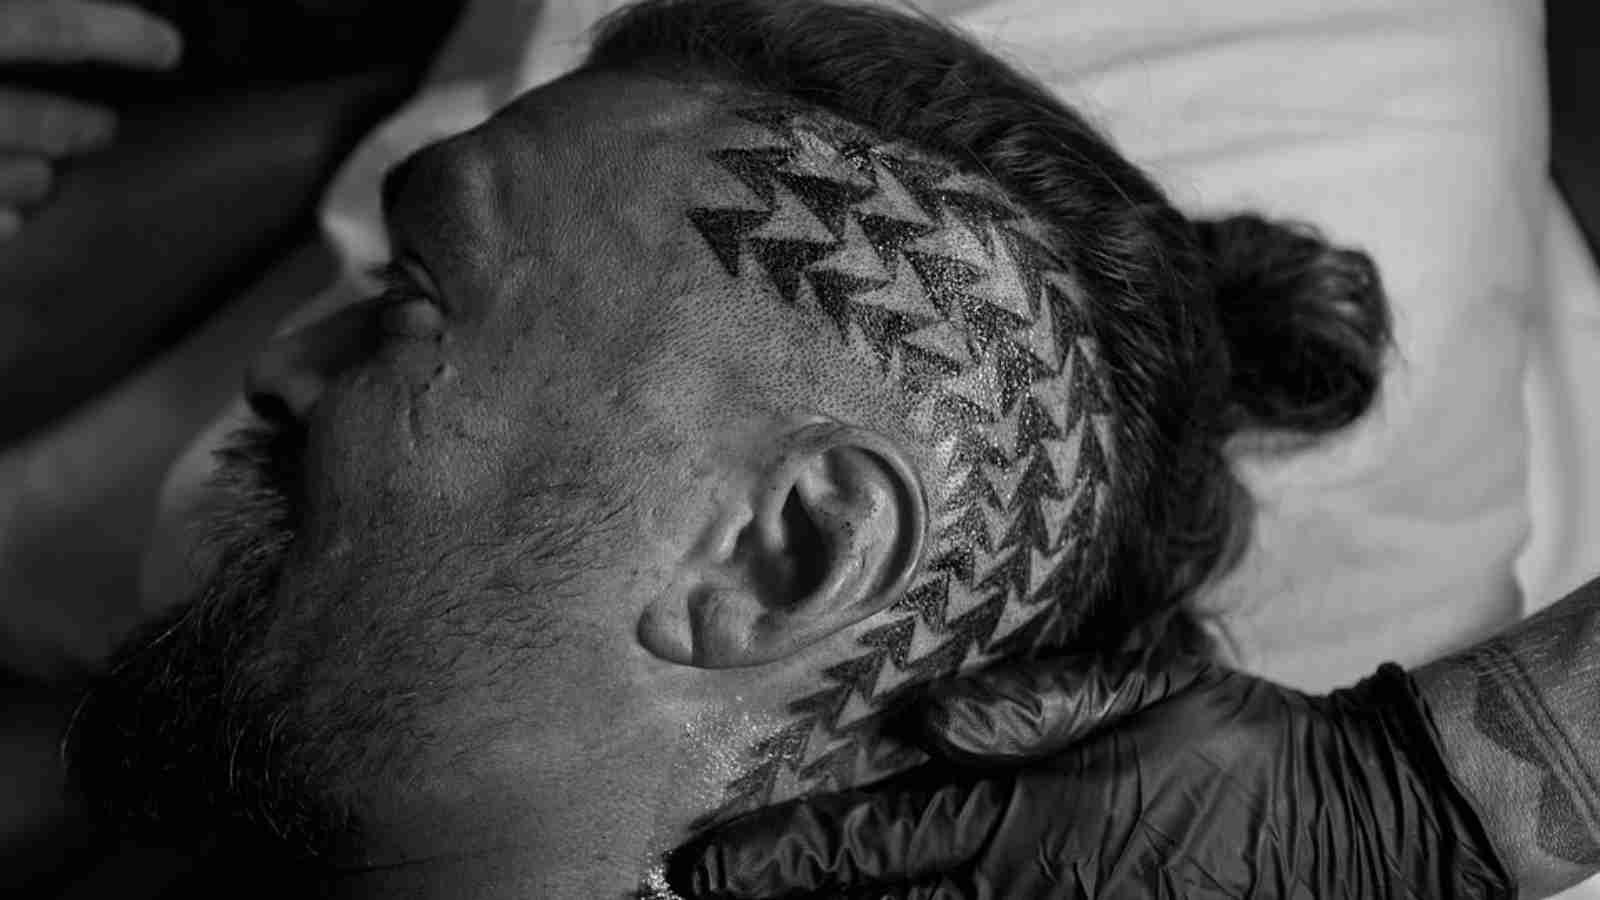 Jason Momoa debuts head tattoo